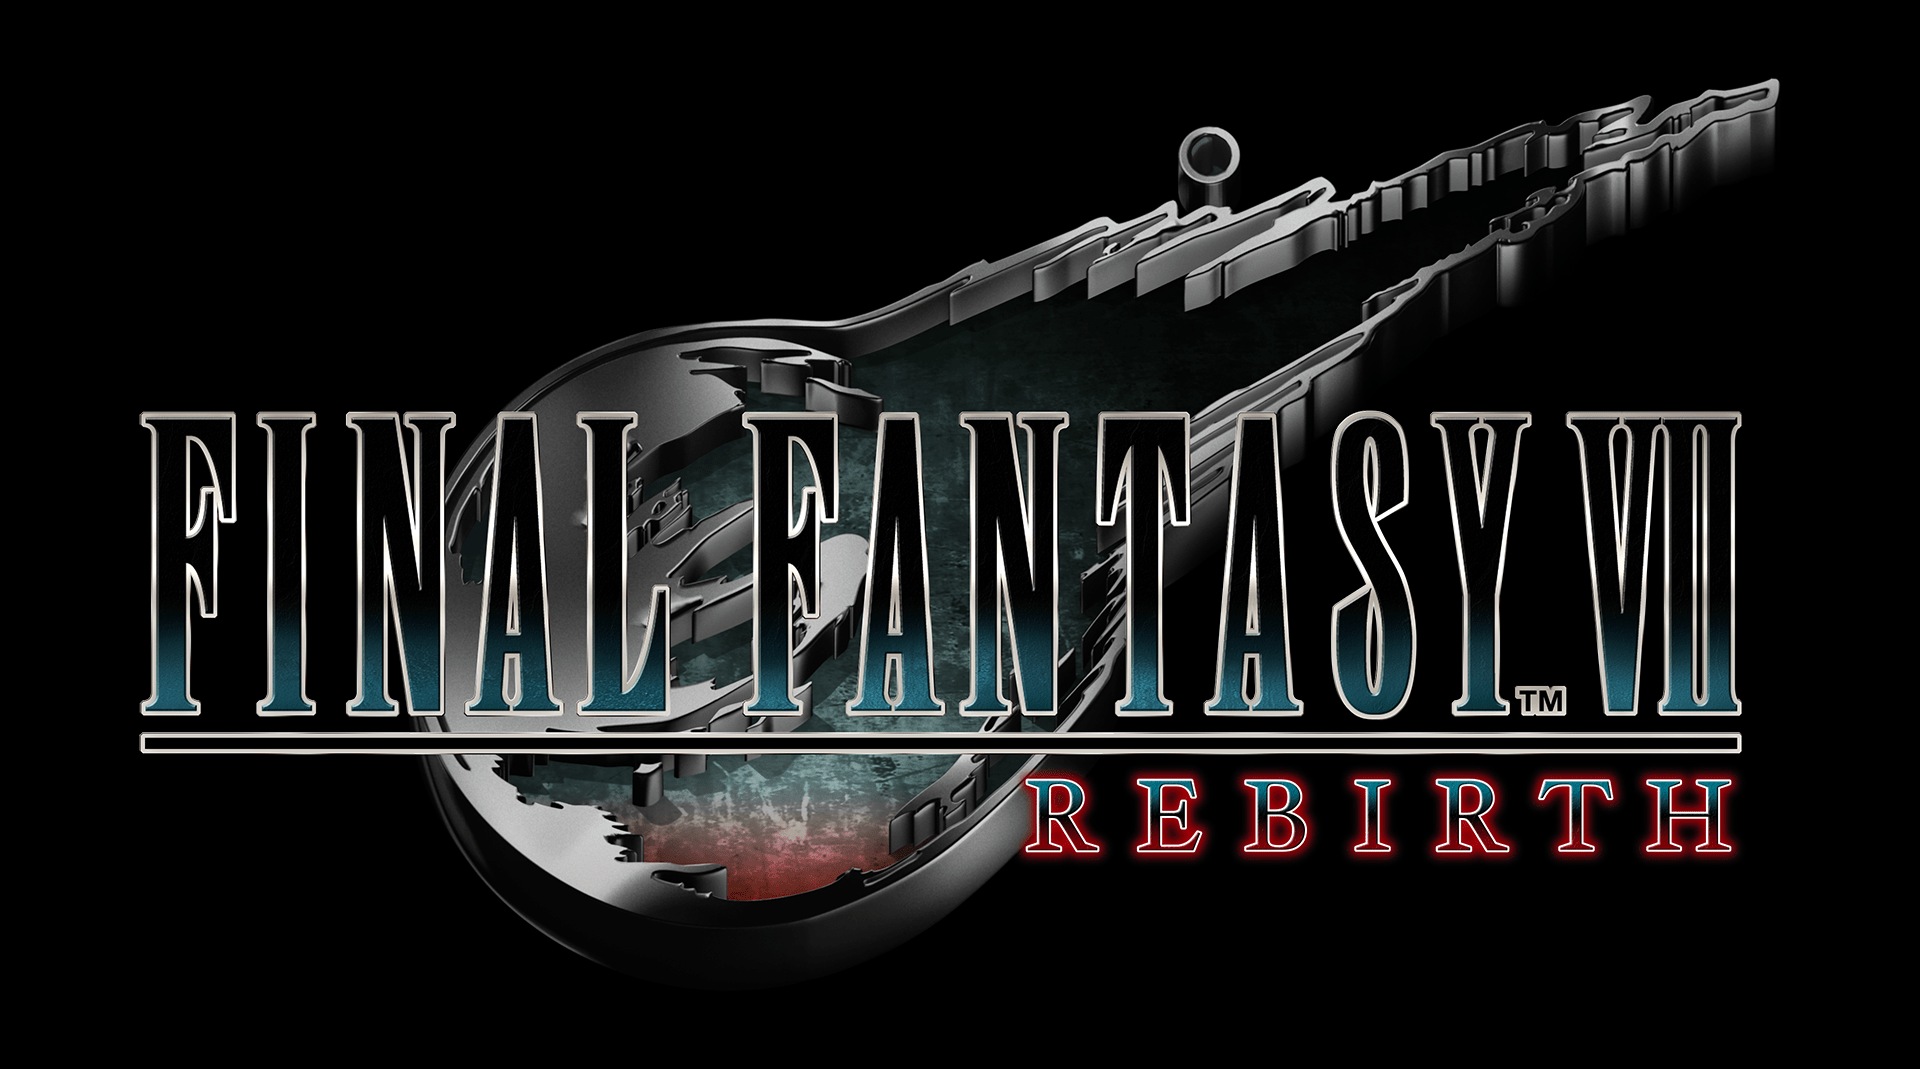 Final Fantasy VII Rebirth - Original Soundtrack Available April 10 